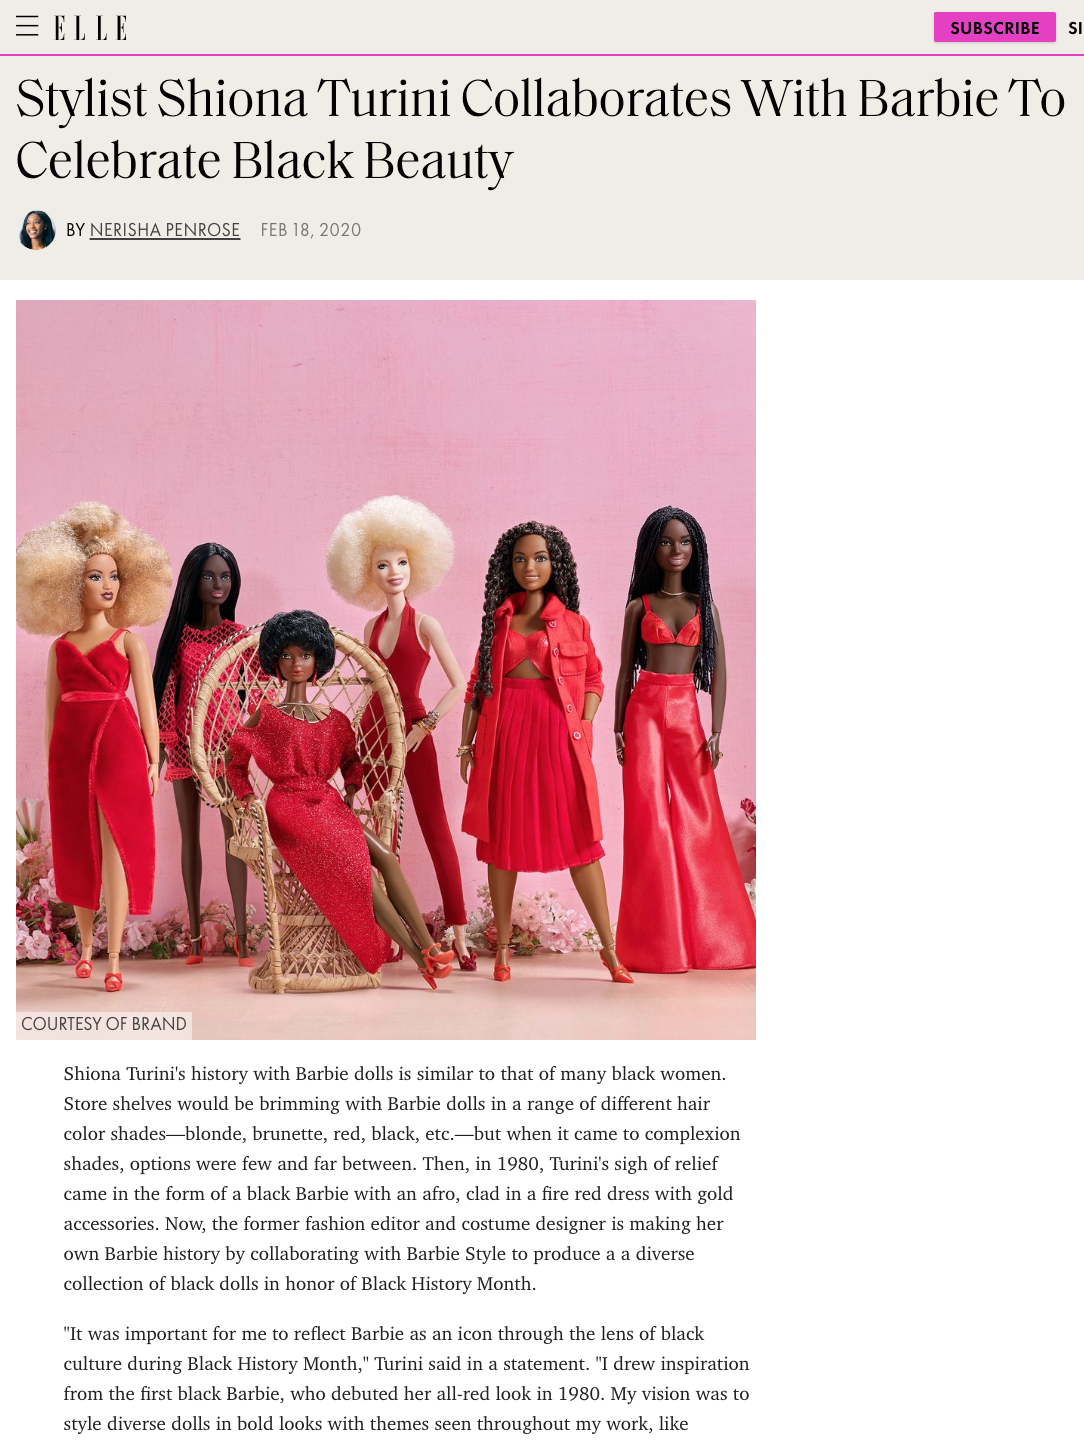 Stylist Shiona Turini Designs New Barbies That Celebrate Black Beauty